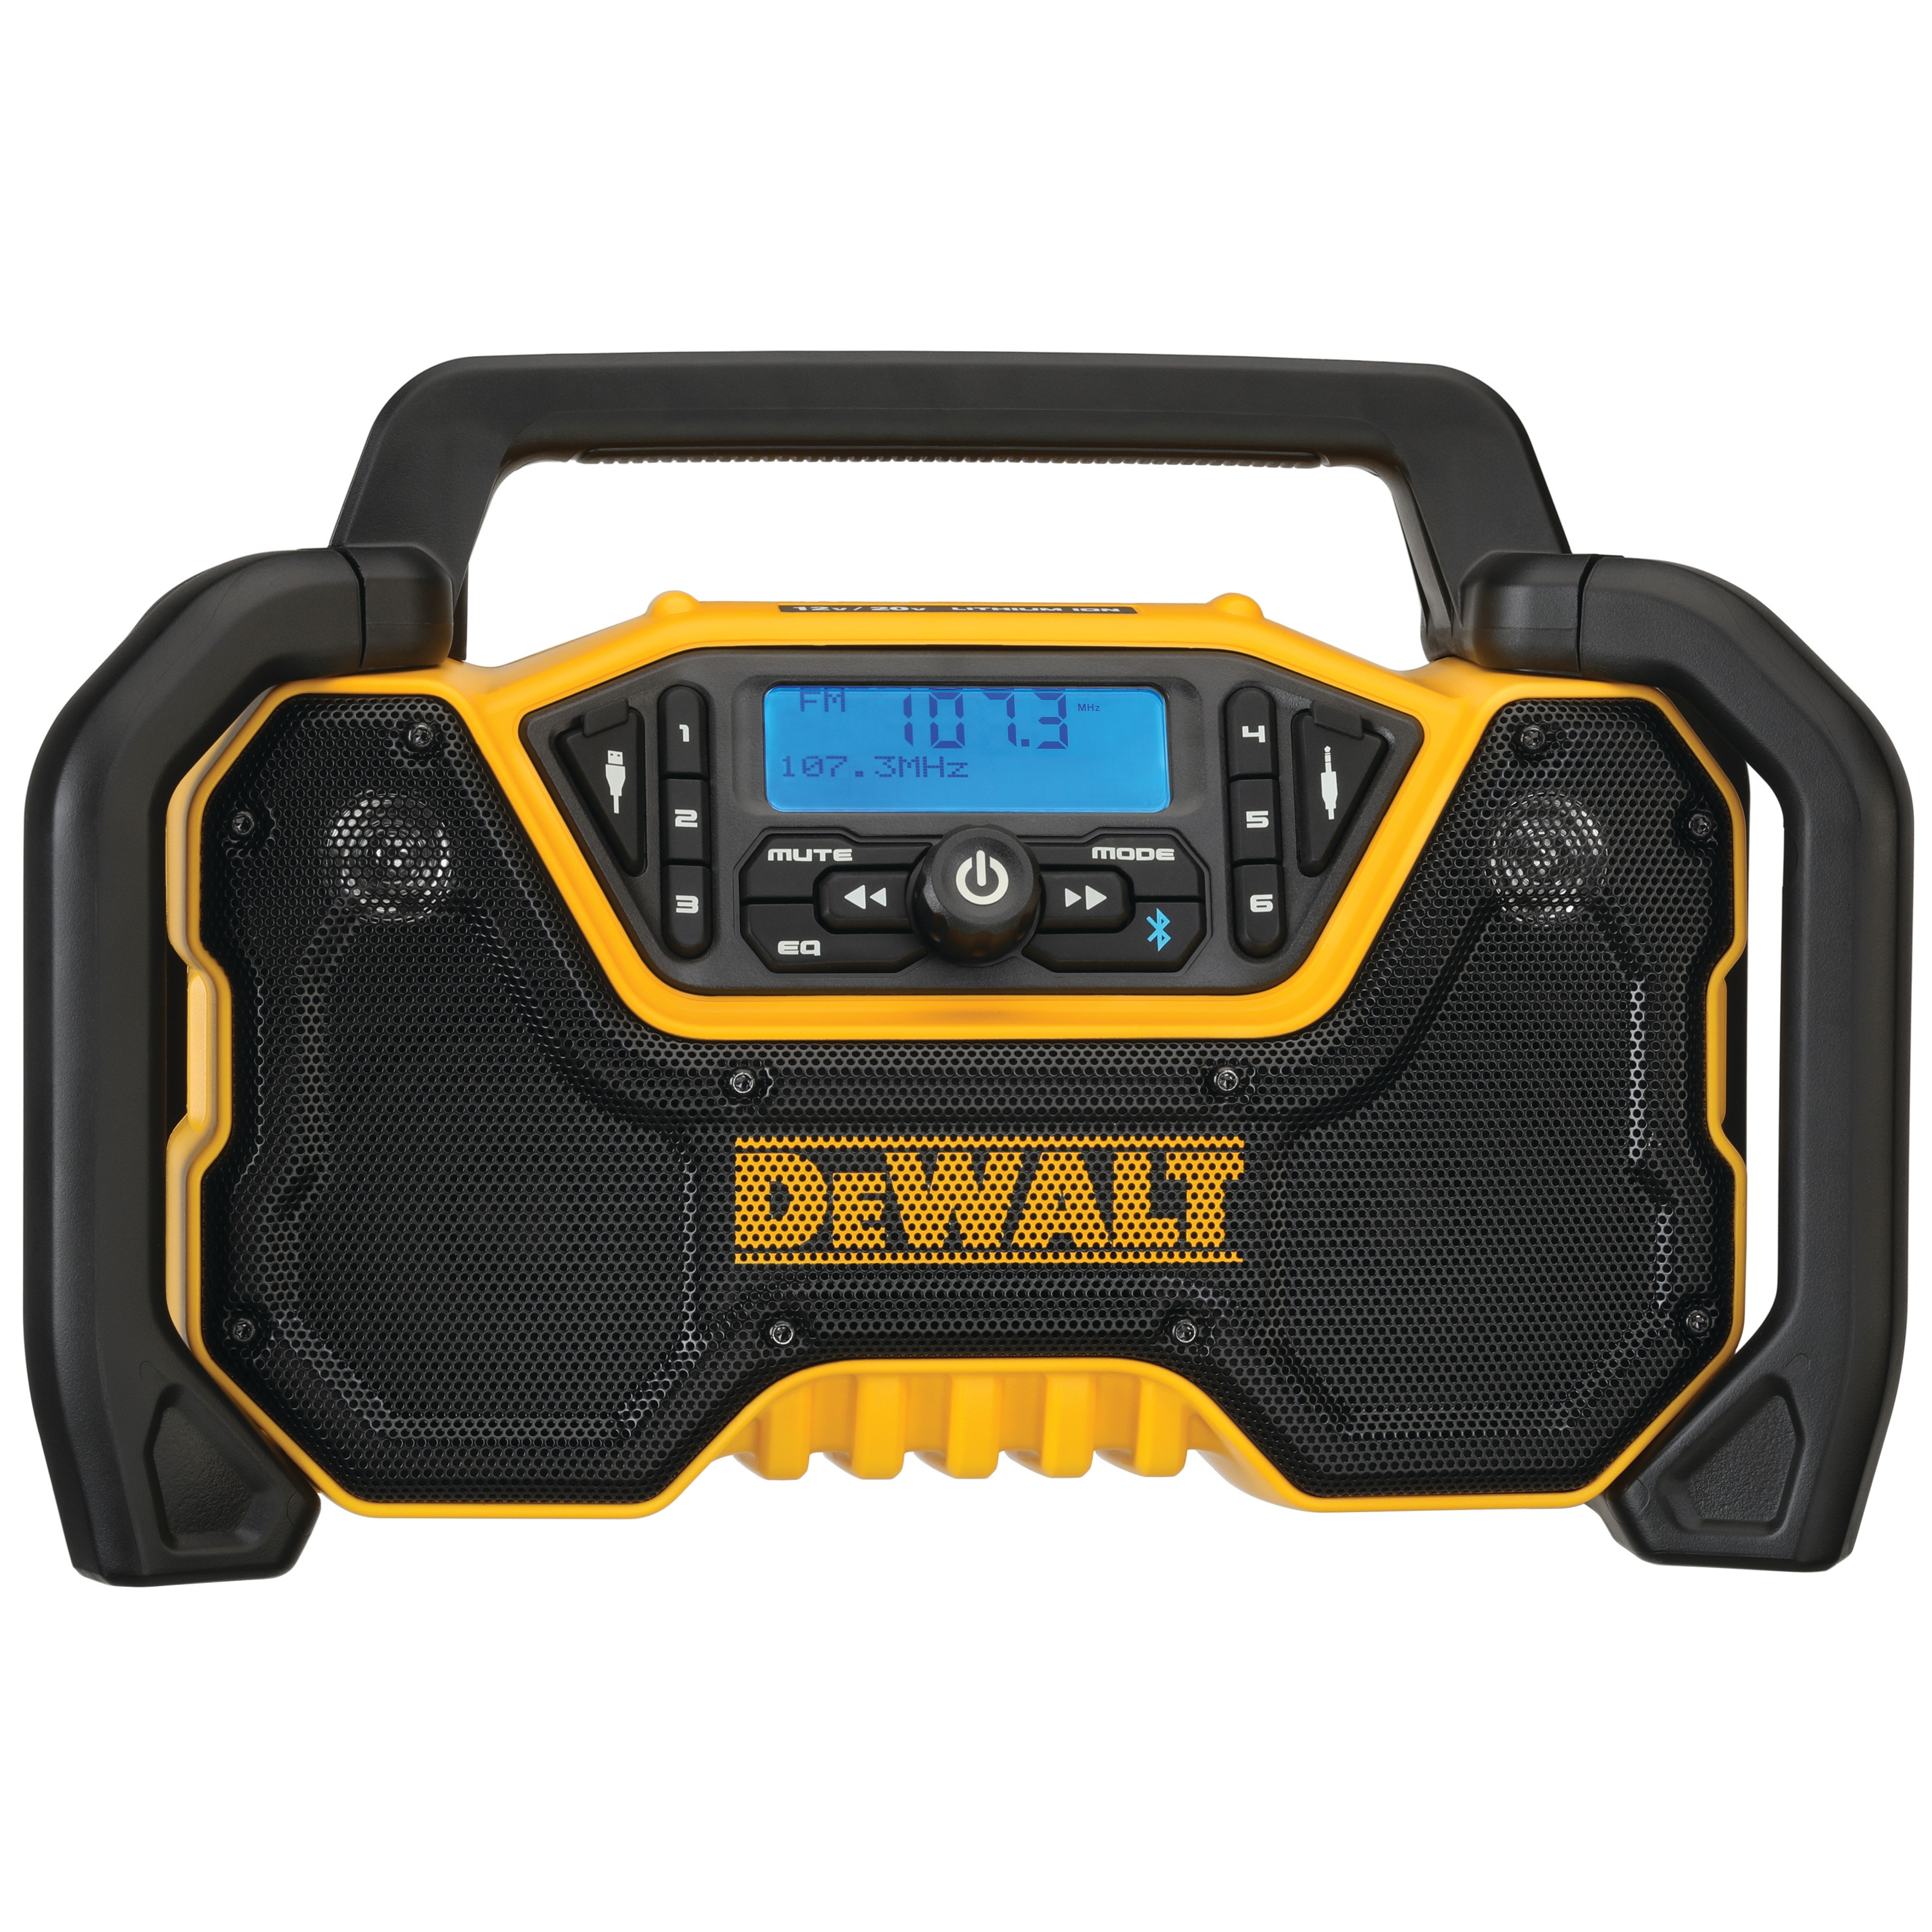 12V/20V Bluetooth® Cordless Jobsite Radio - DCR028B | DEWALT